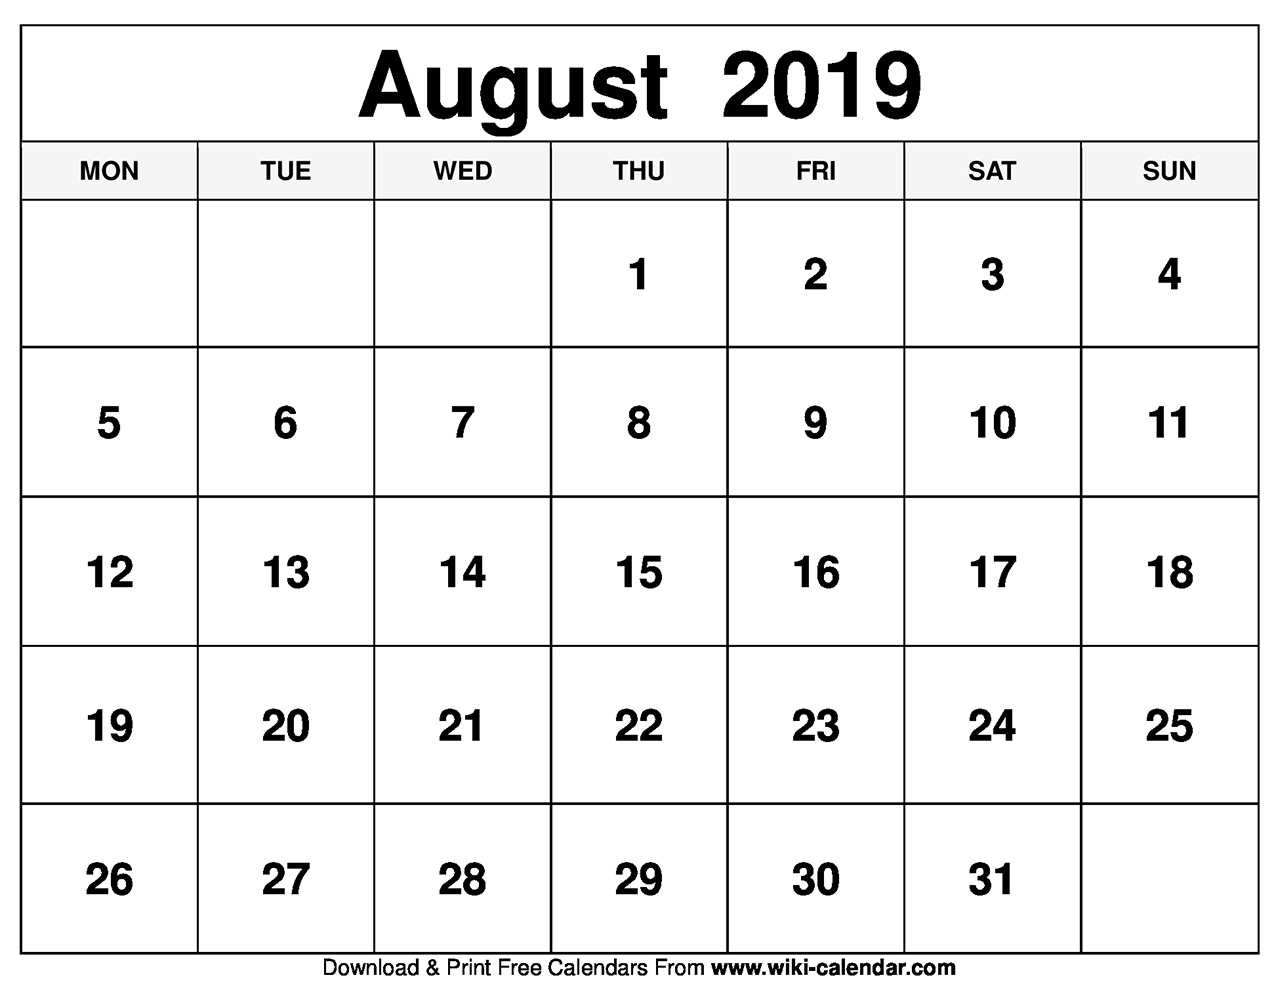 Blank August 2019 Calendar Printable - Ko-Fi ❤️ Where 2020 Calendar Blank Starting Monday